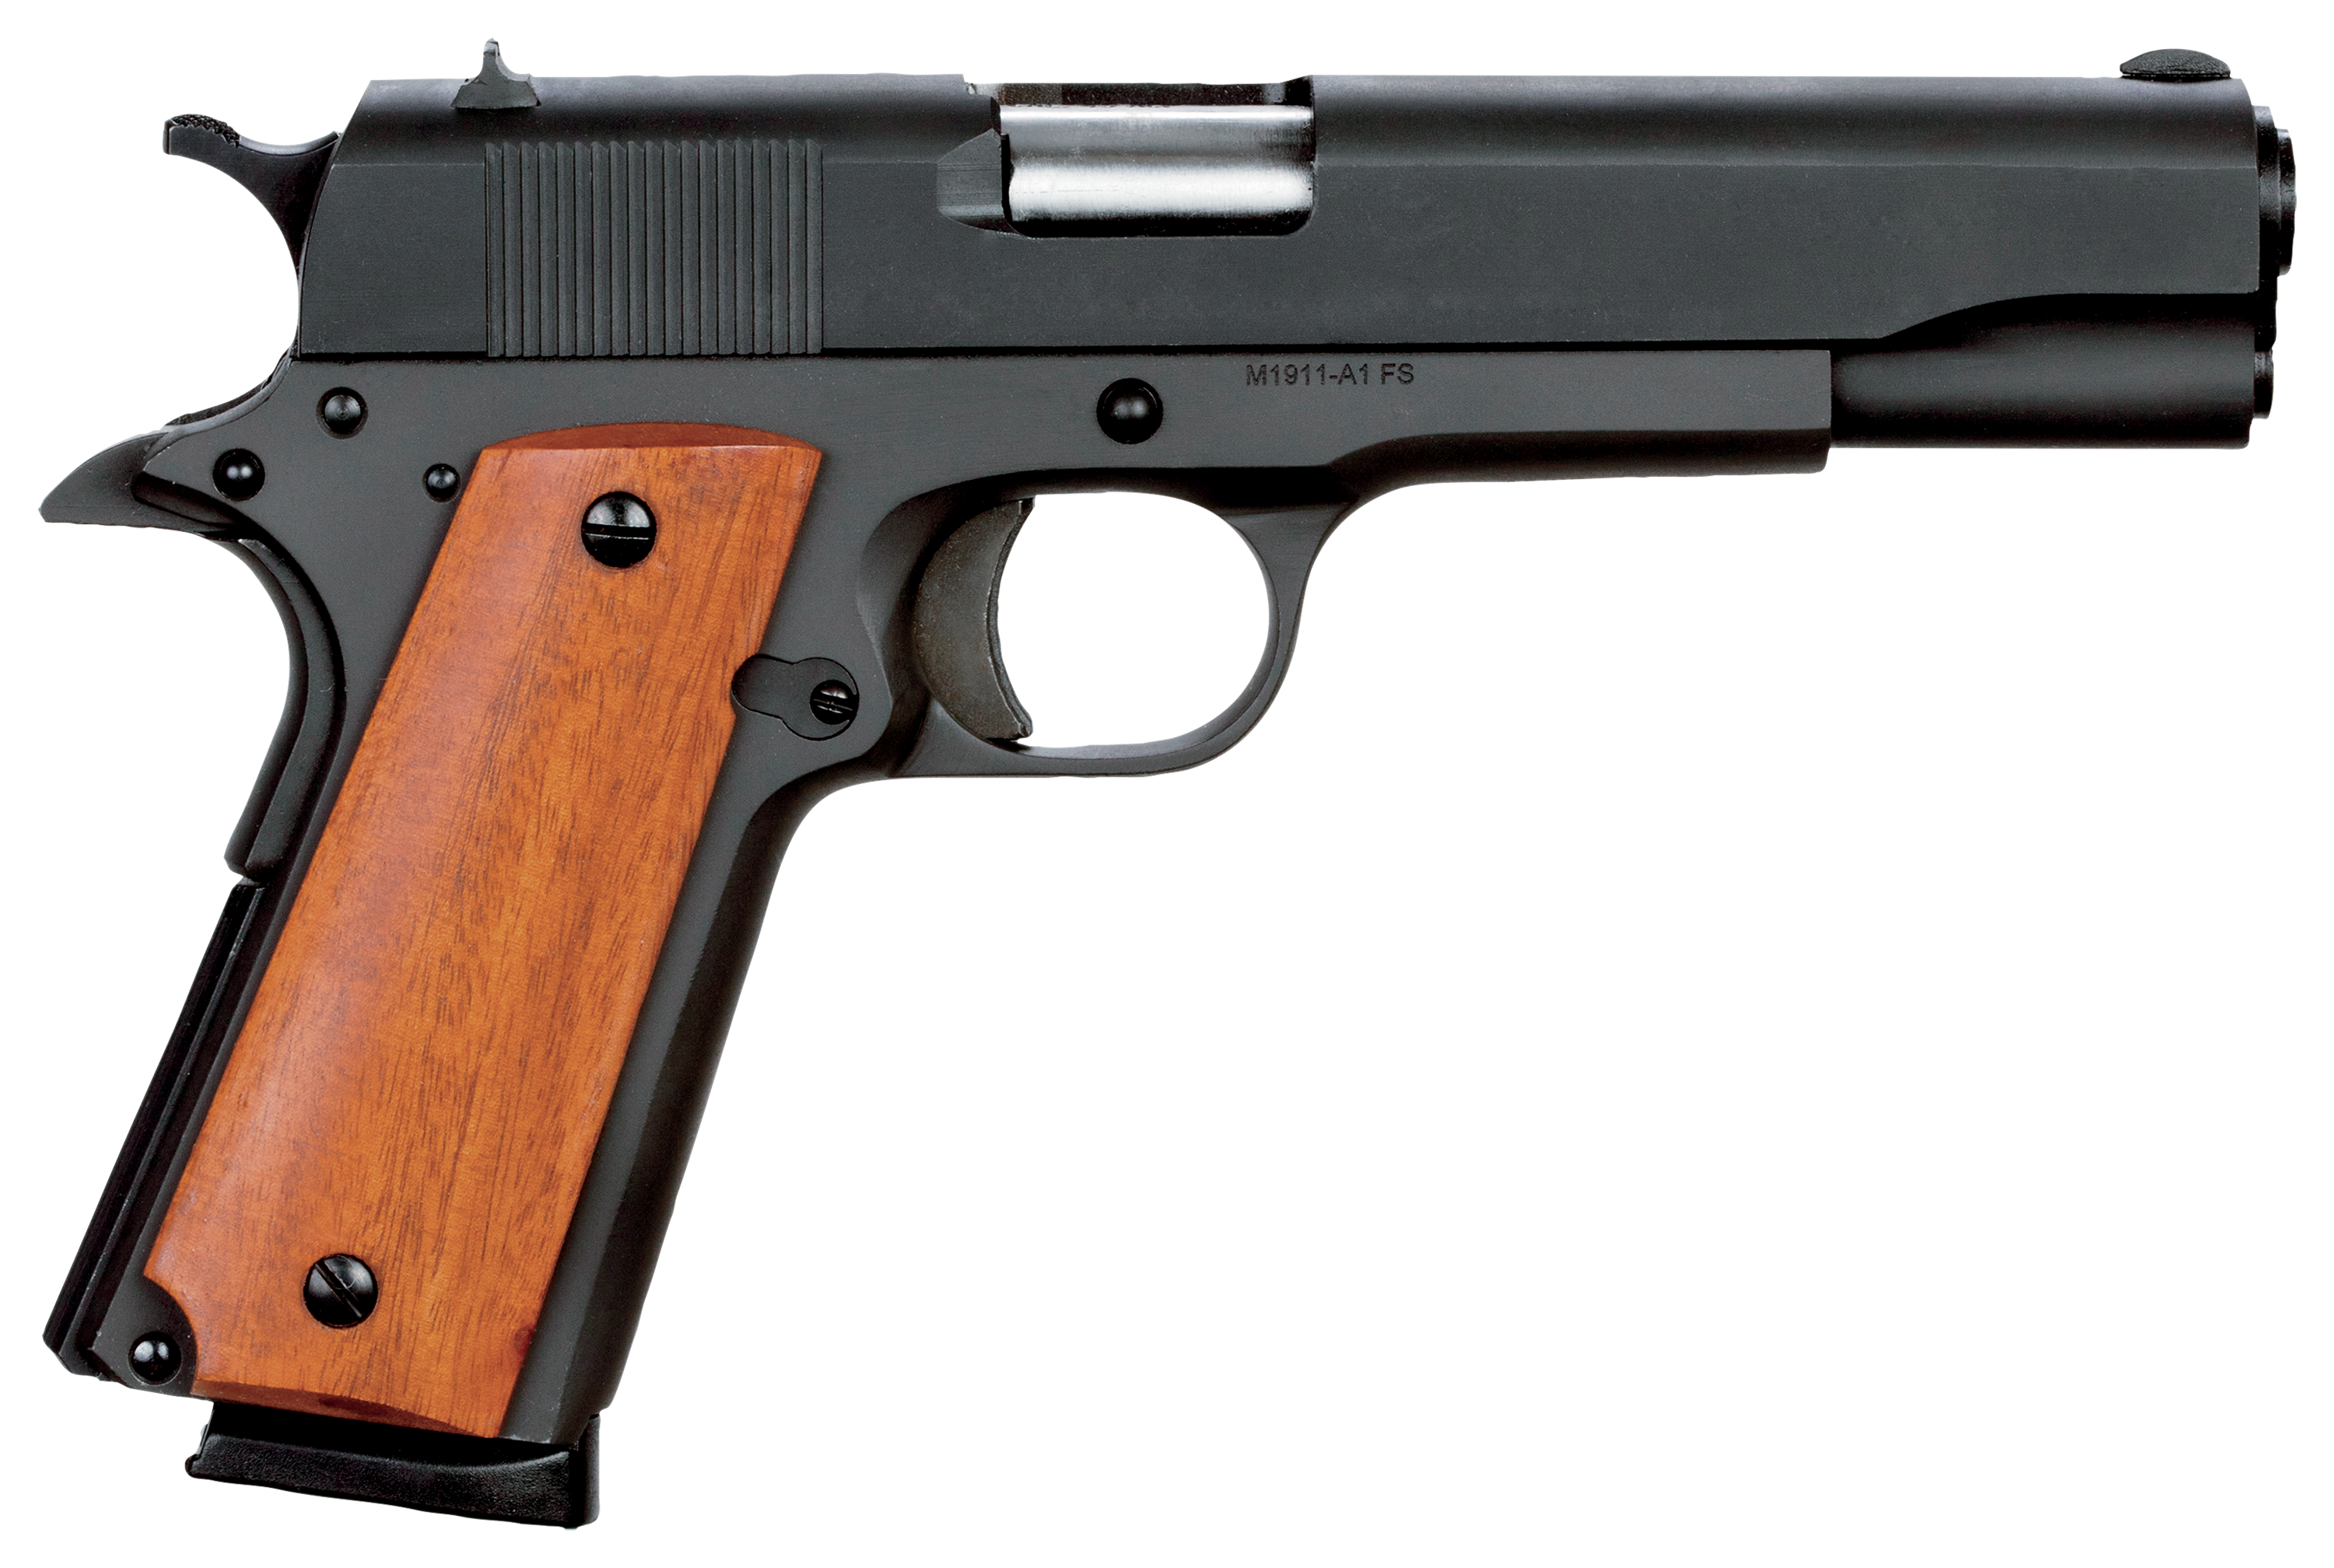 Rock Island M1911 GI Standard FS Semi-Auto Centerfire Pistol ...